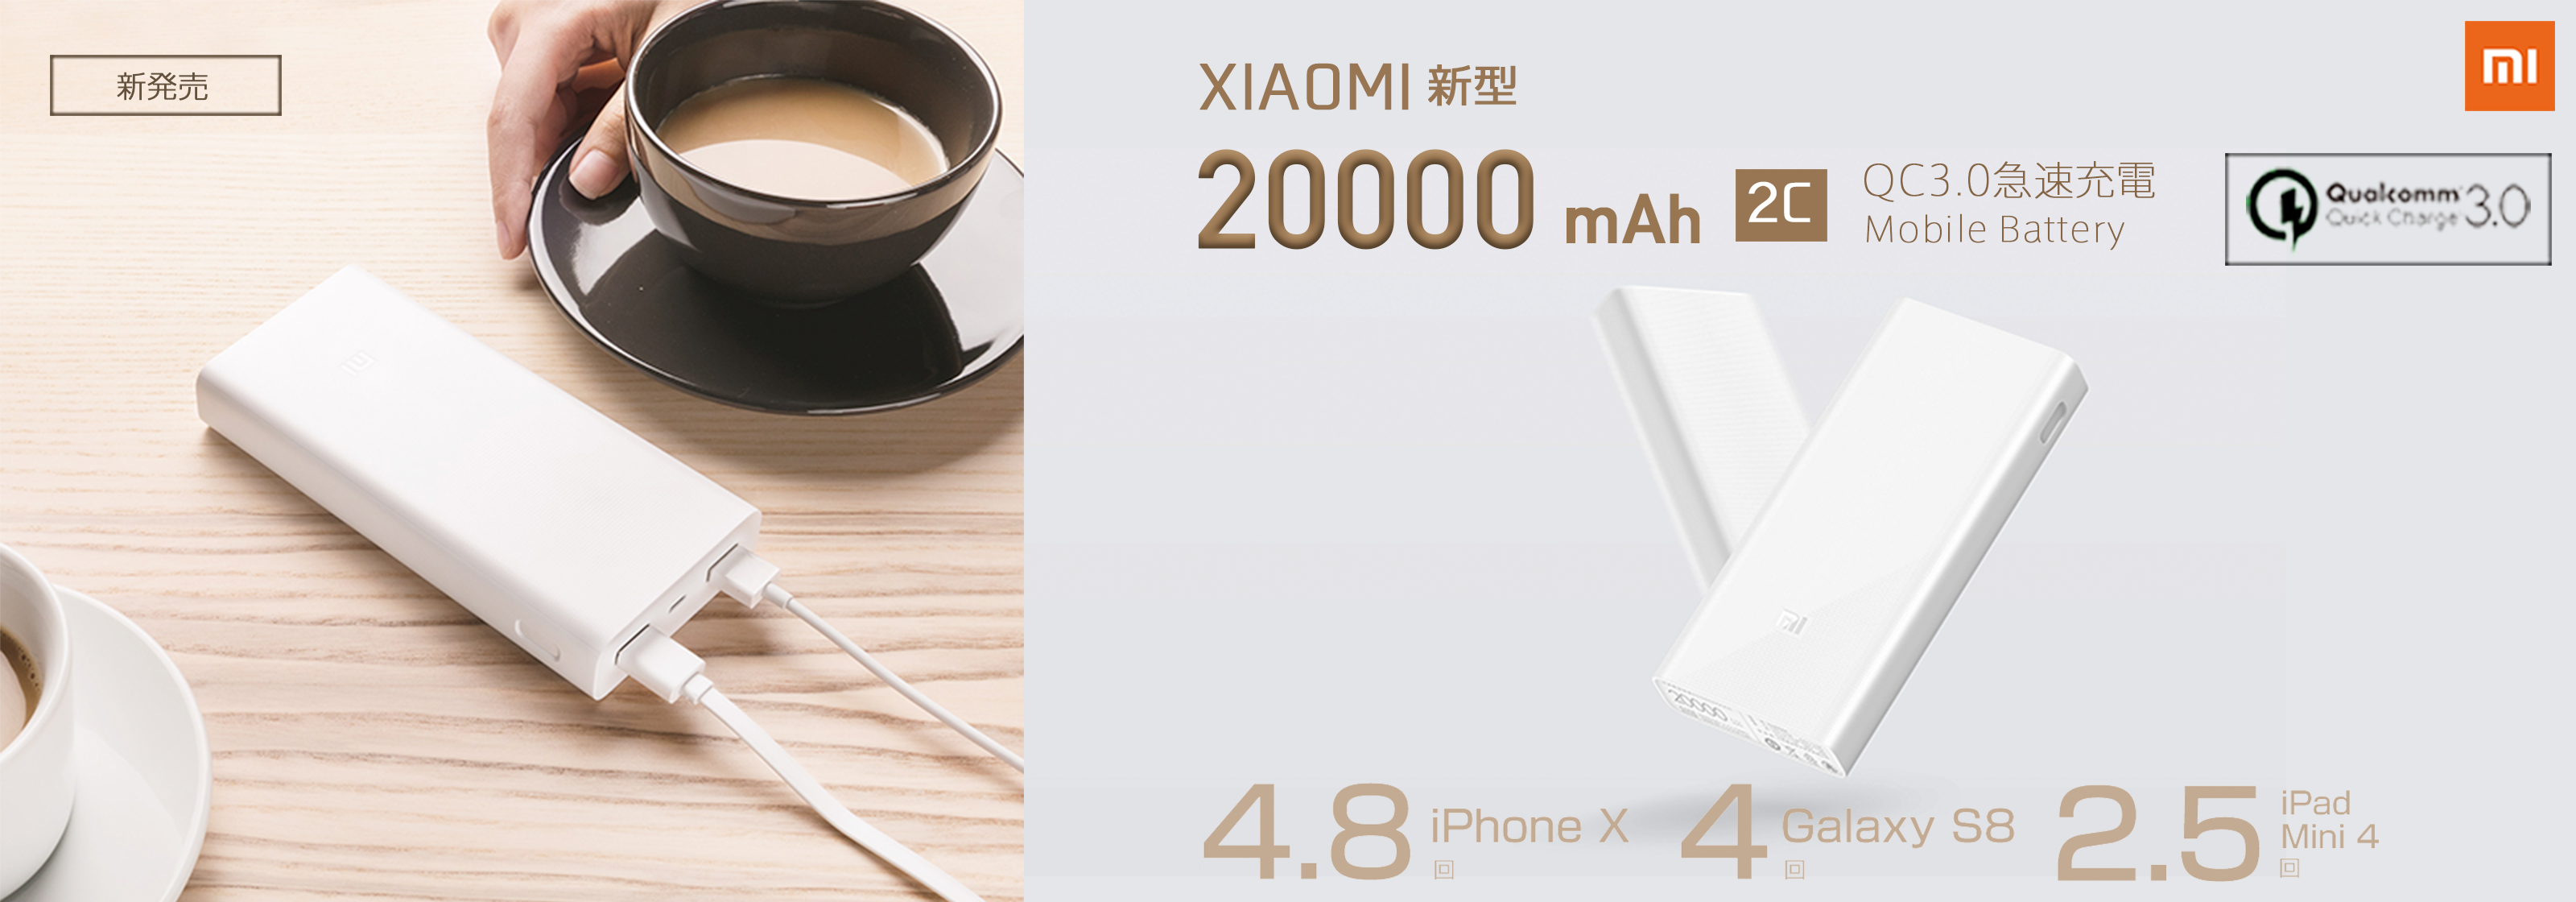 Xiaomi 新型20000mAh 2C モバイルバッテリー ホワイト